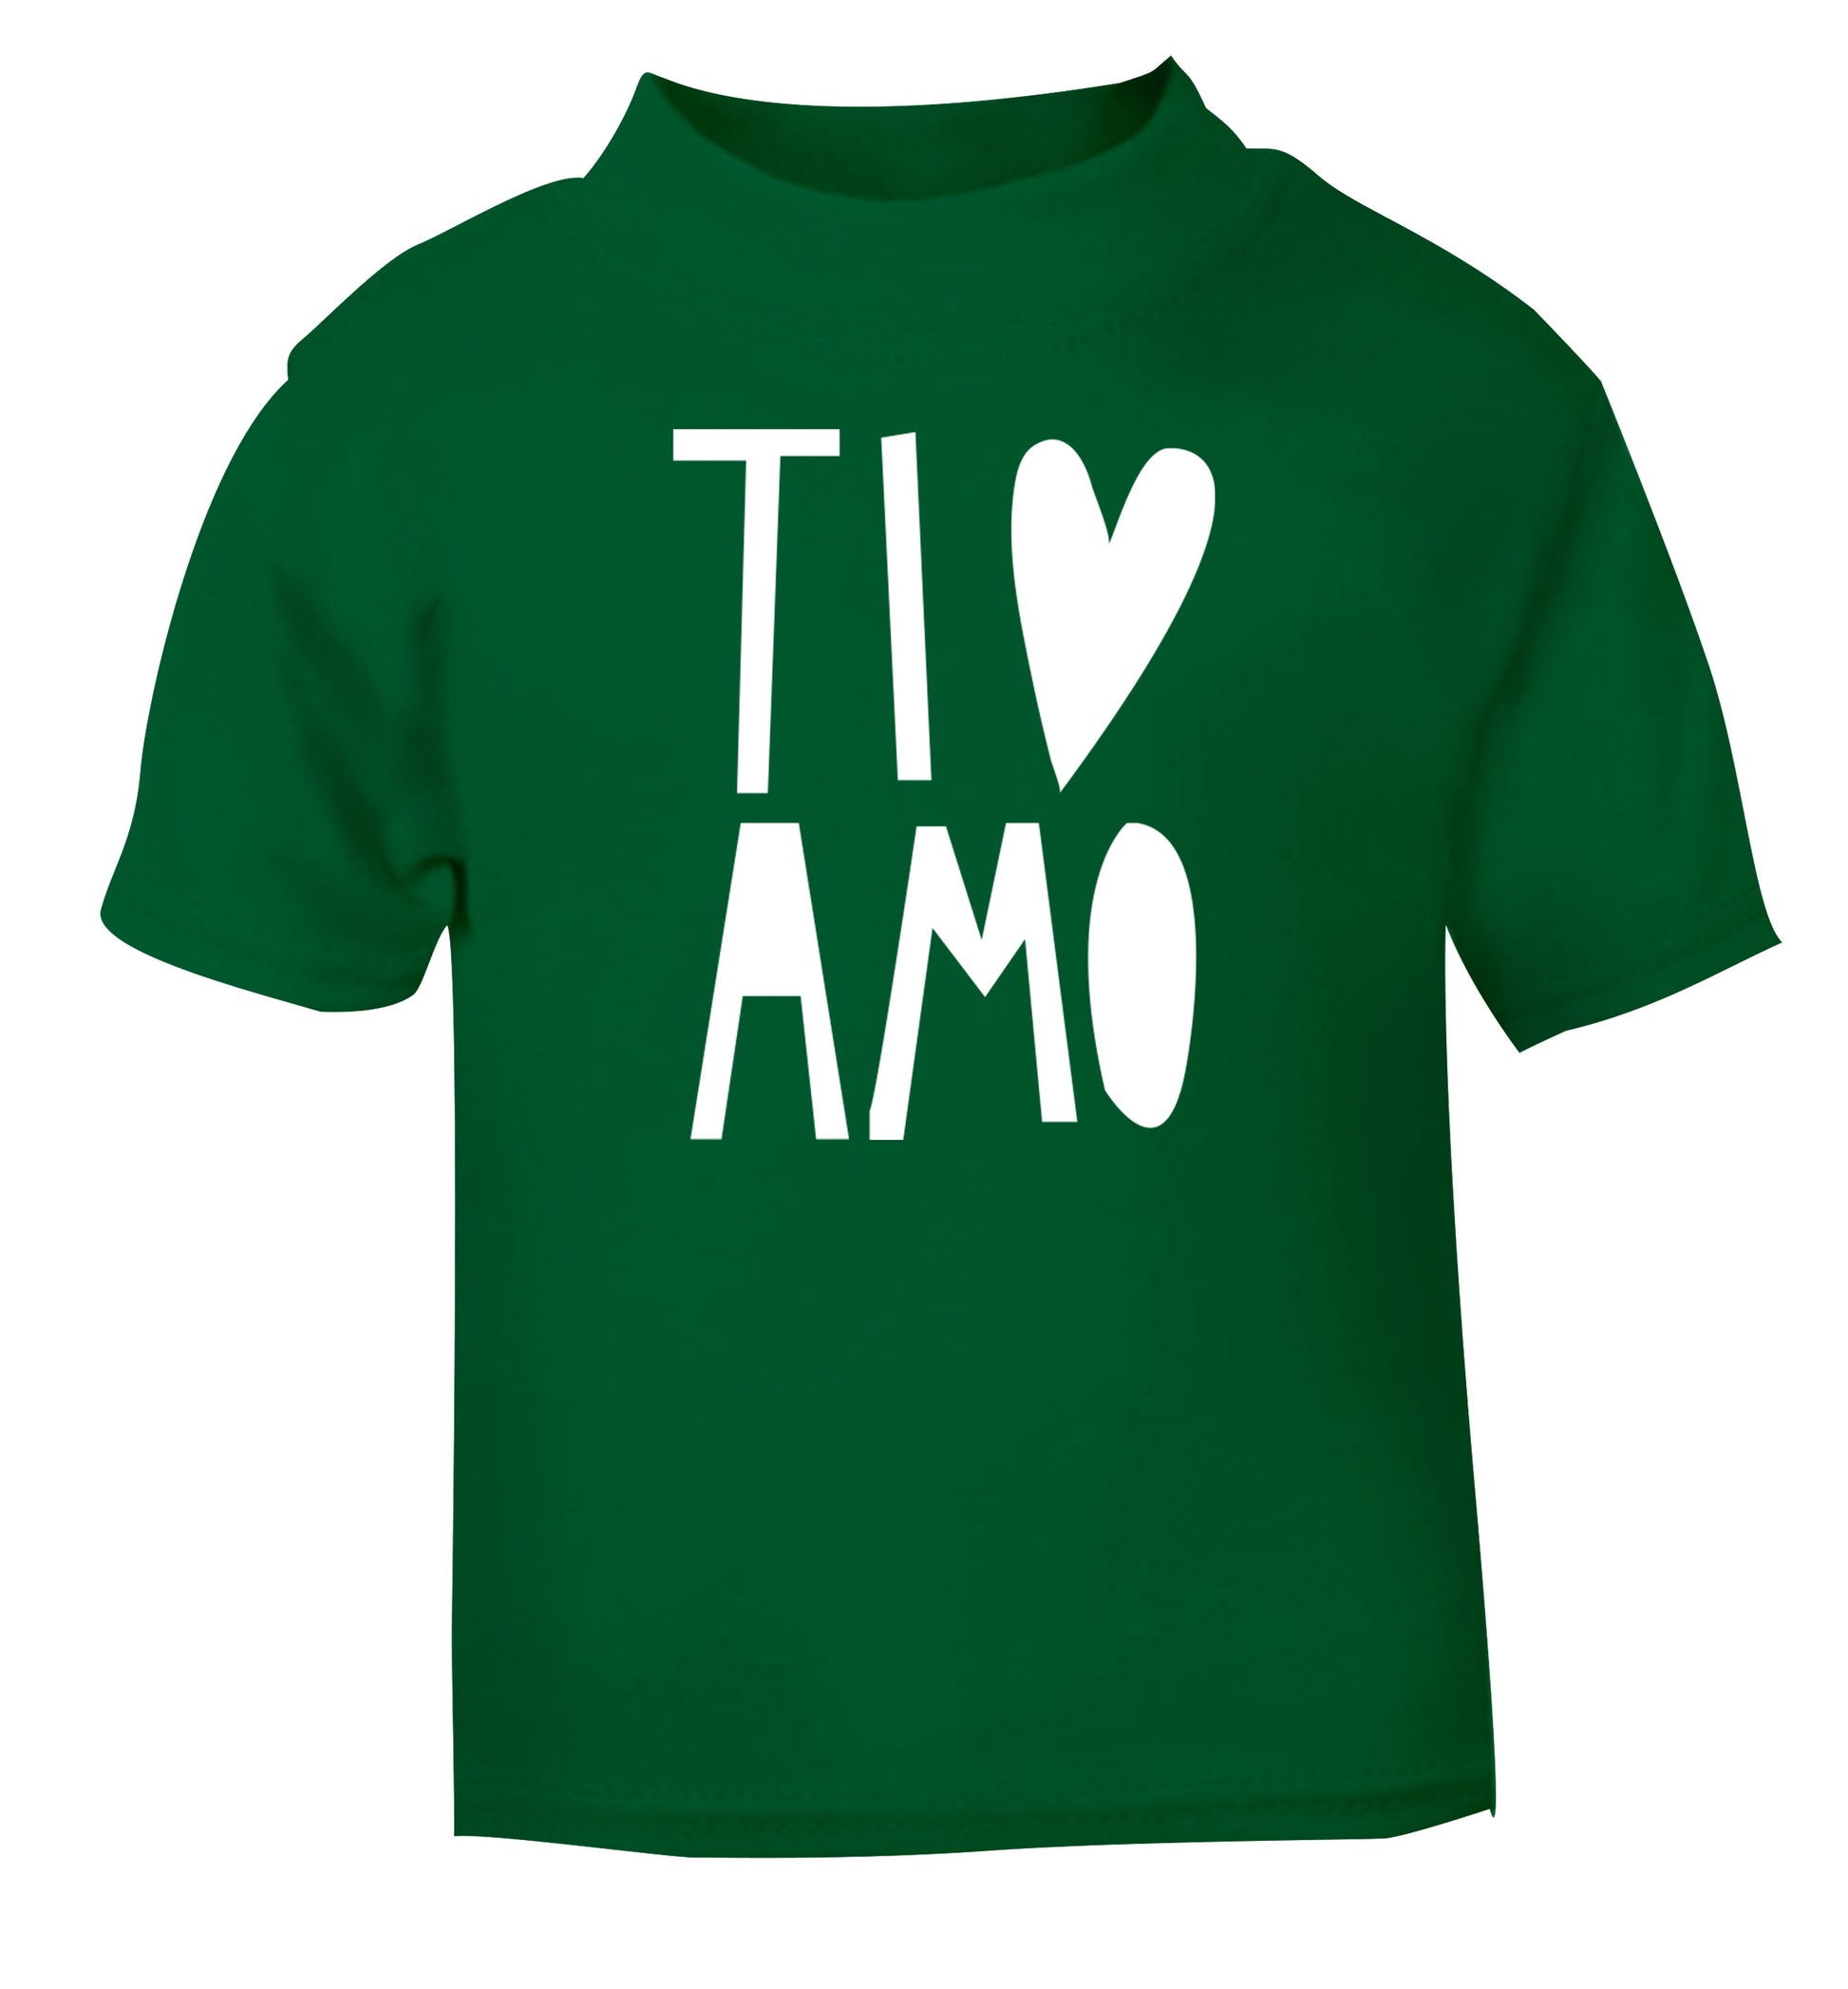 Ti amo - I love you green Baby Toddler Tshirt 2 Years